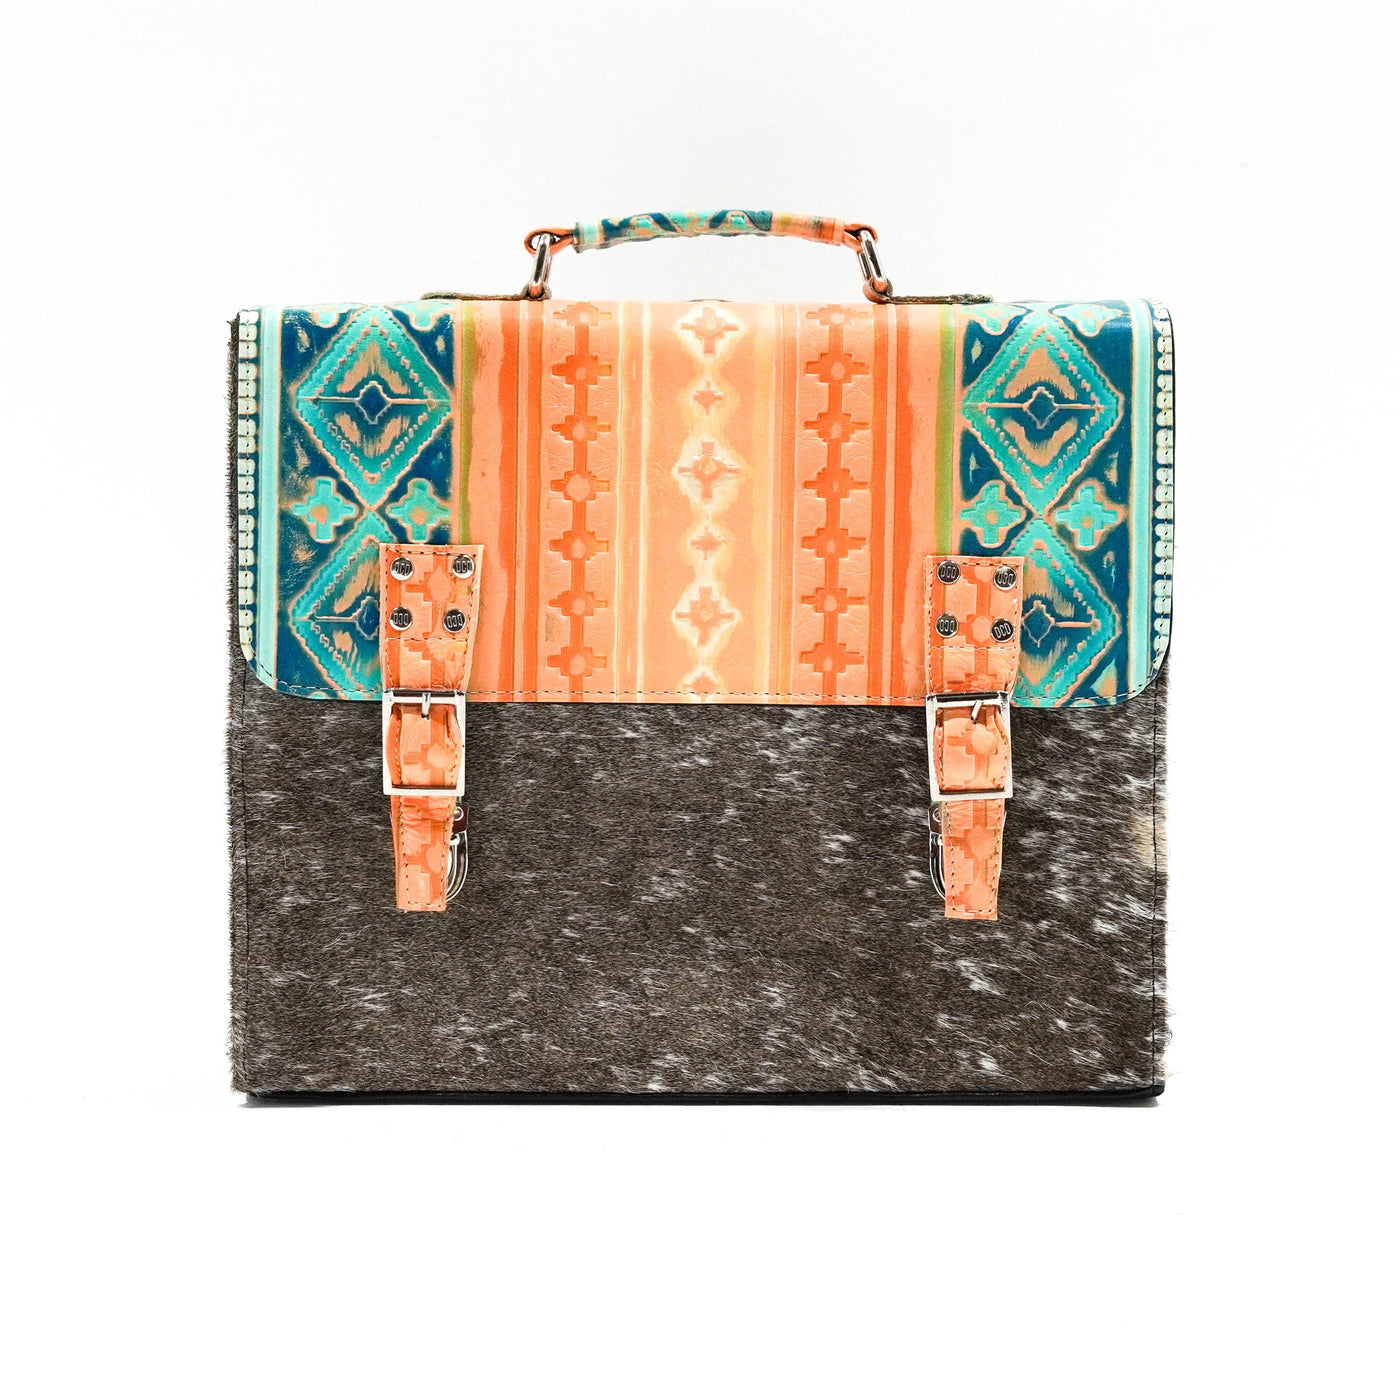 Briefcase - Longhorn w/ Margaritaville Navajo-Briefcase-Western-Cowhide-Bags-Handmade-Products-Gifts-Dancing Cactus Designs